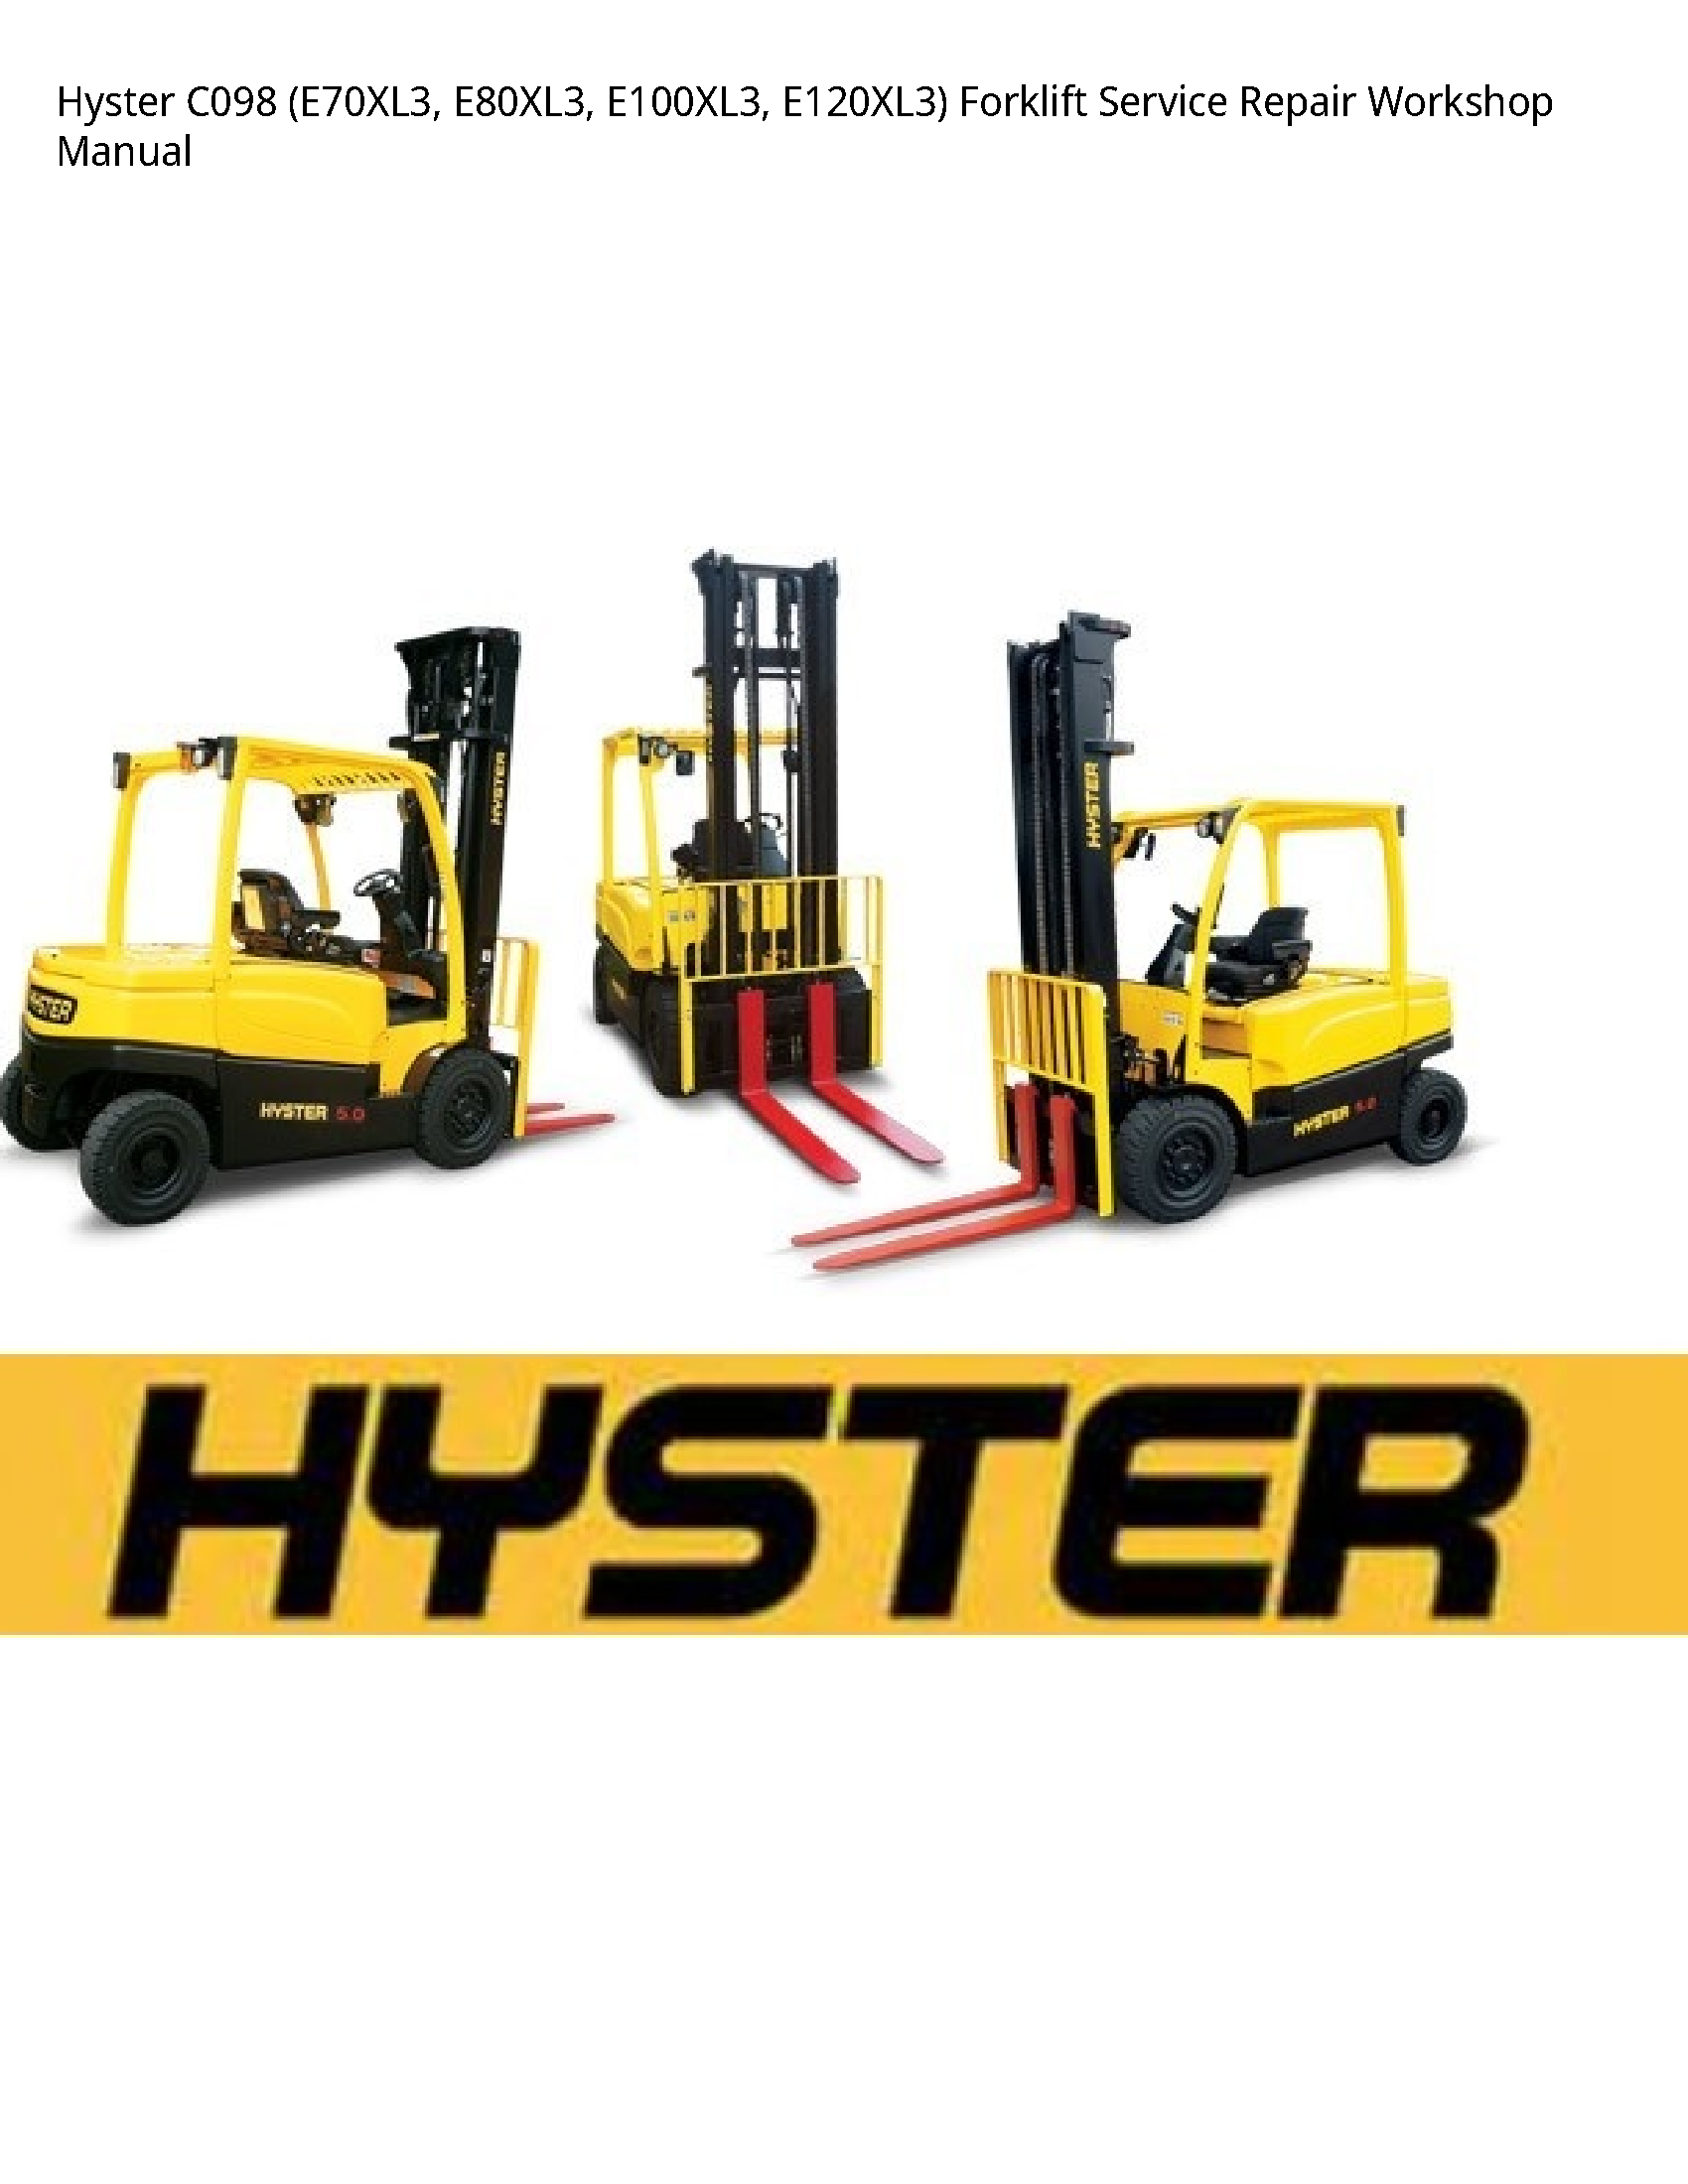 Hyster C098 Forklift manual